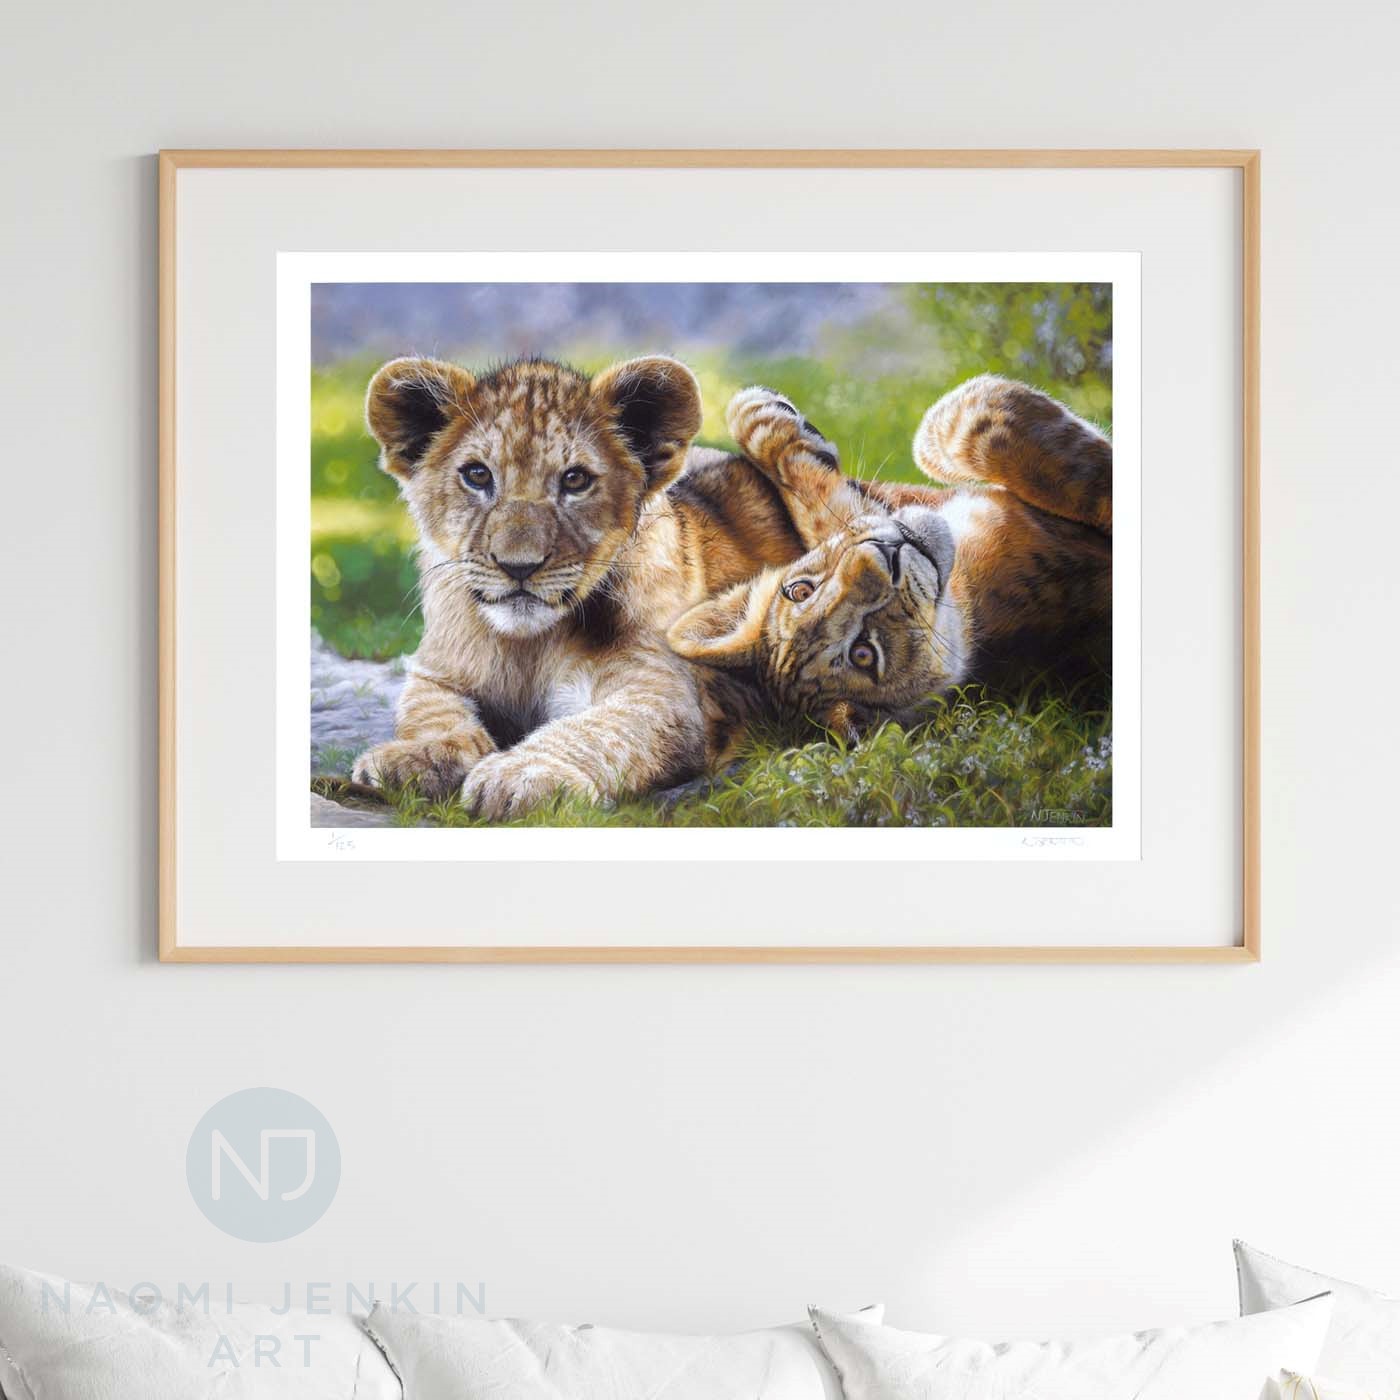 Framed fine art print of lion painting by wildlife artist Naomi Jenkin. 